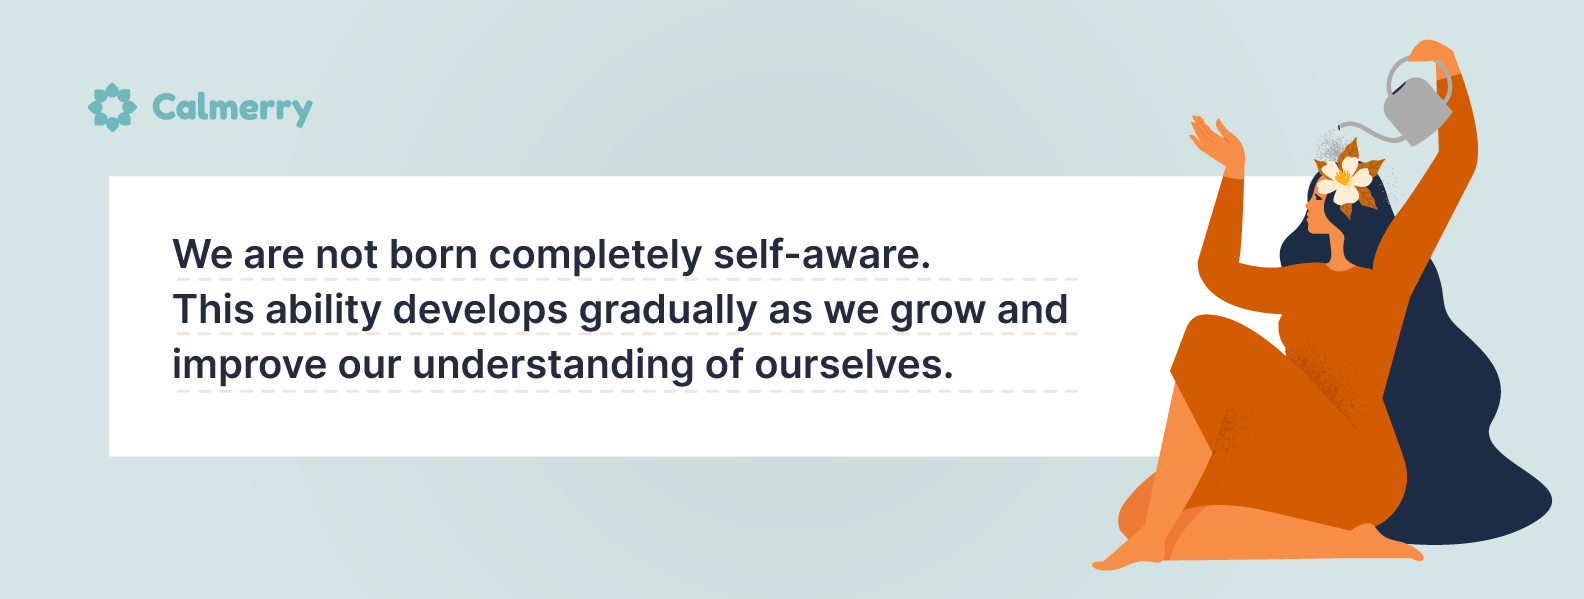 Self-awareness development